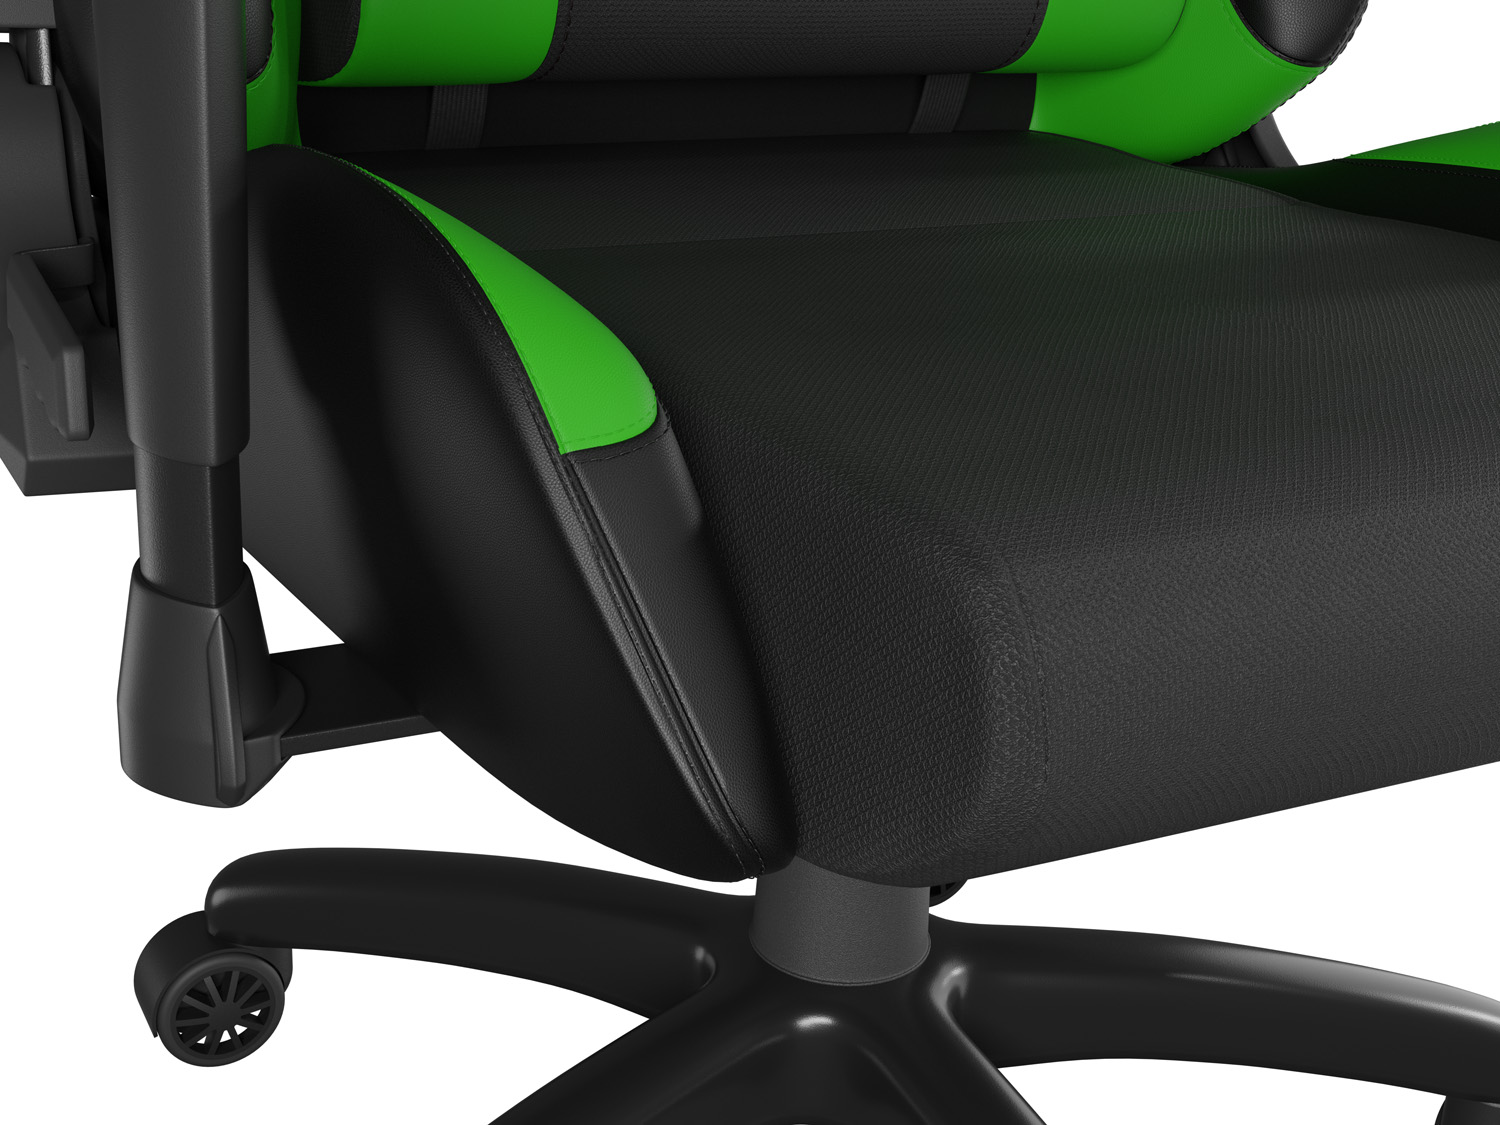 Genesis gamer szék Nitro 550, zöld